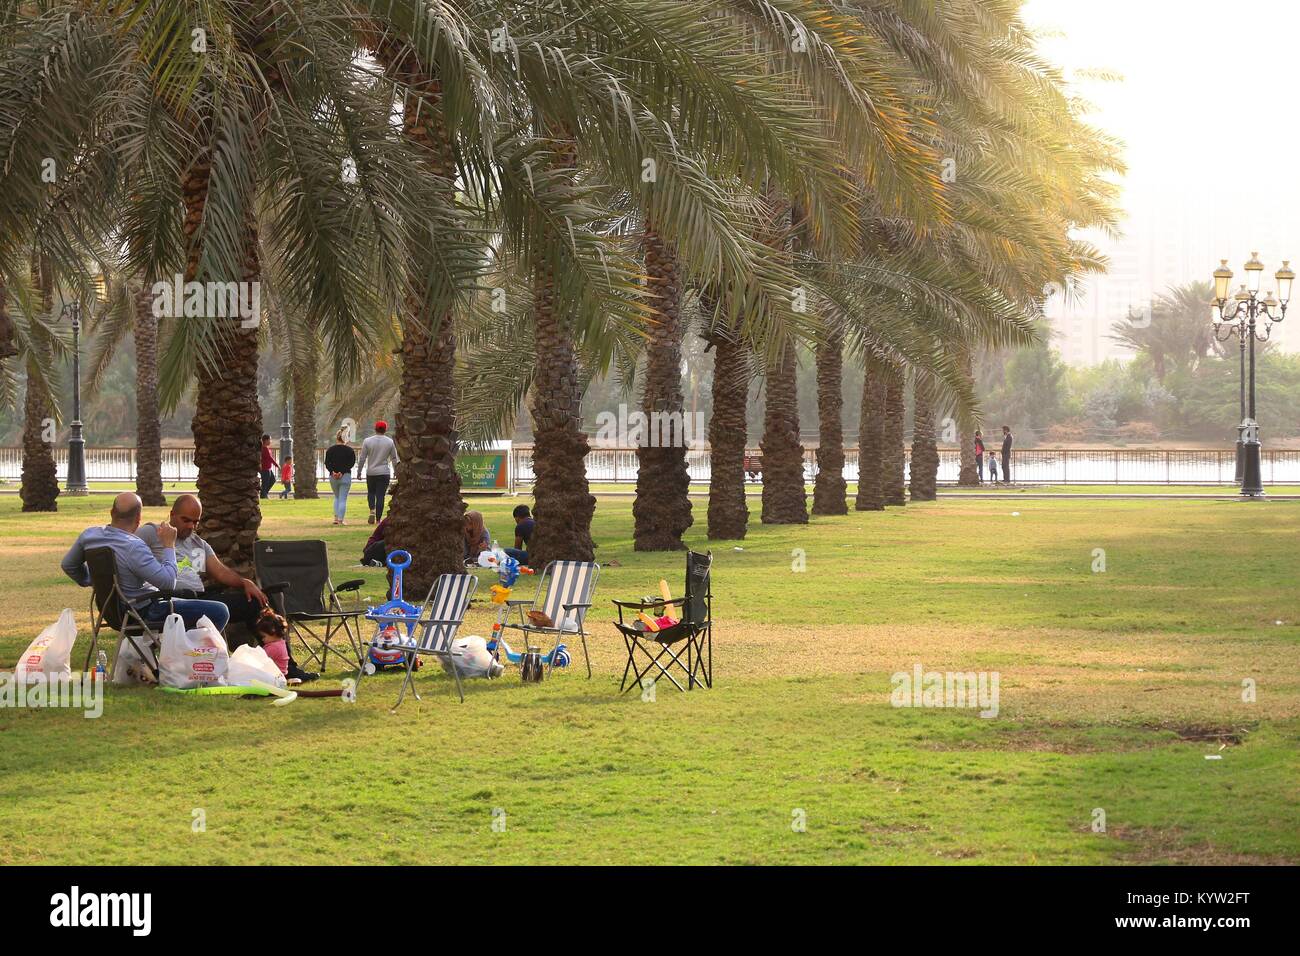 SHARJAH, UAE - DECEMBER 10, 2017: People visit Al Nakheel Oasis park with palm trees in Sharjah, UAE. This third populous city of UAE is the capital o Stock Photo